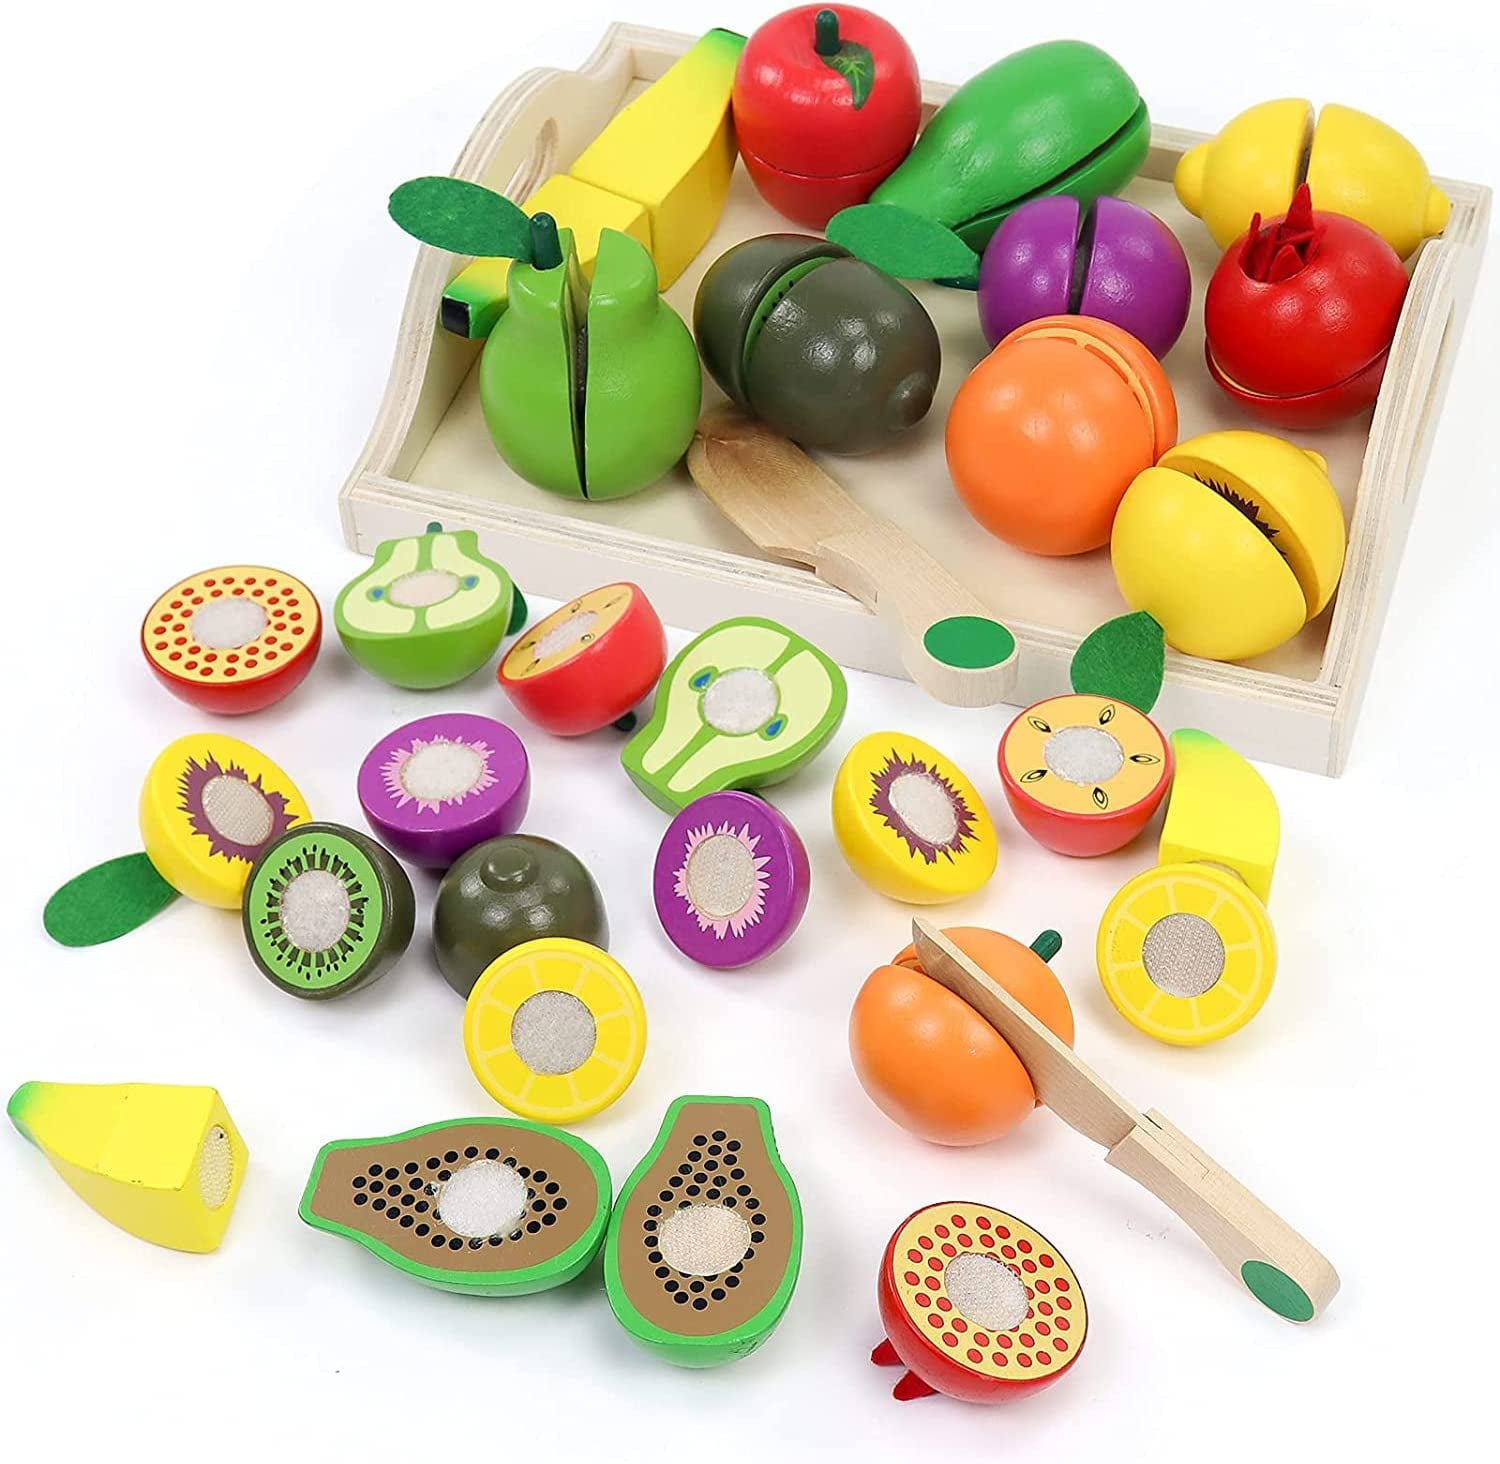 Play Kitchen Set, Montessori Furniture, Pretend Play Kitchen Wooden, Girl  or Boy Birthday Gift, Toy Kitchen, Gifts for Kids, Playroom Decor 